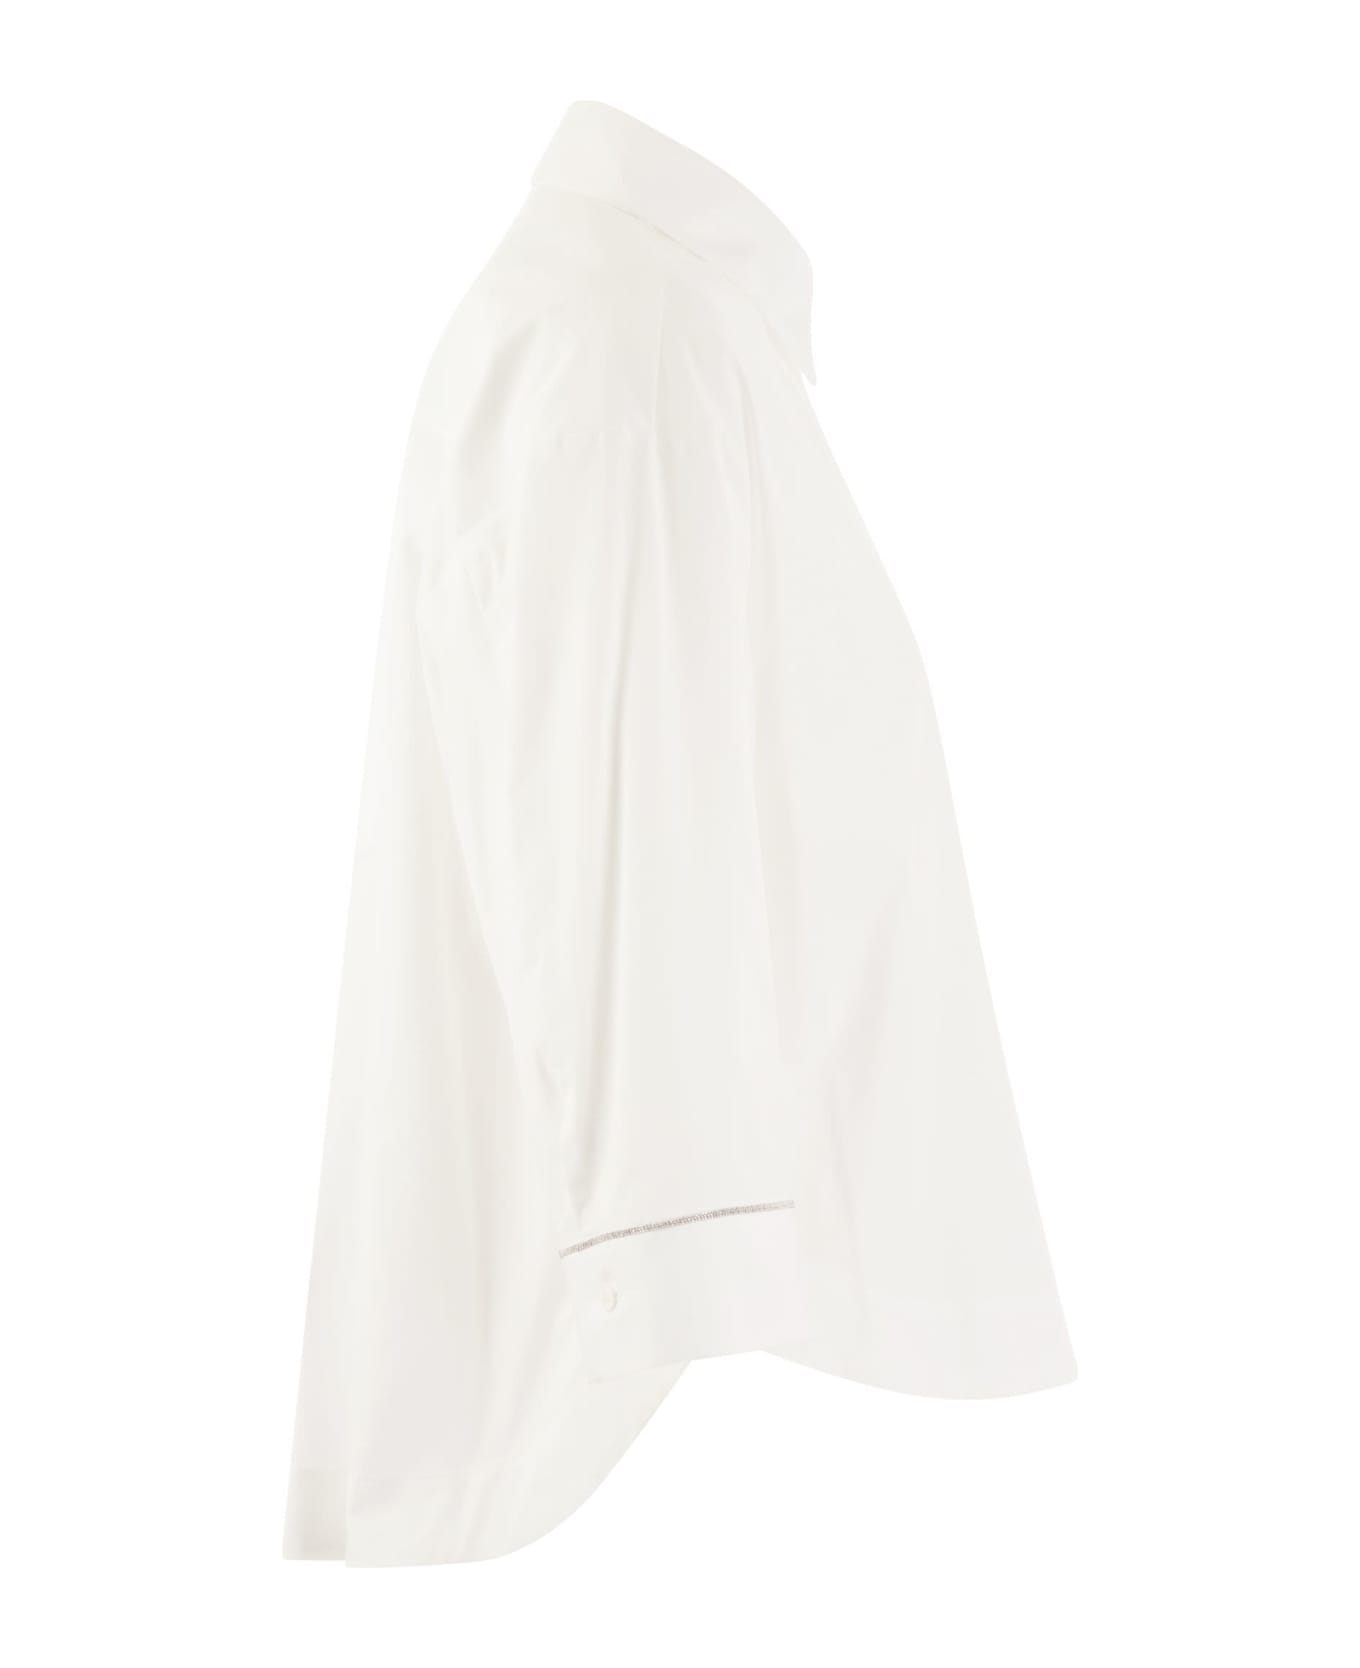 Peserico Plain Cotton Poplin Shirt - White シャツ